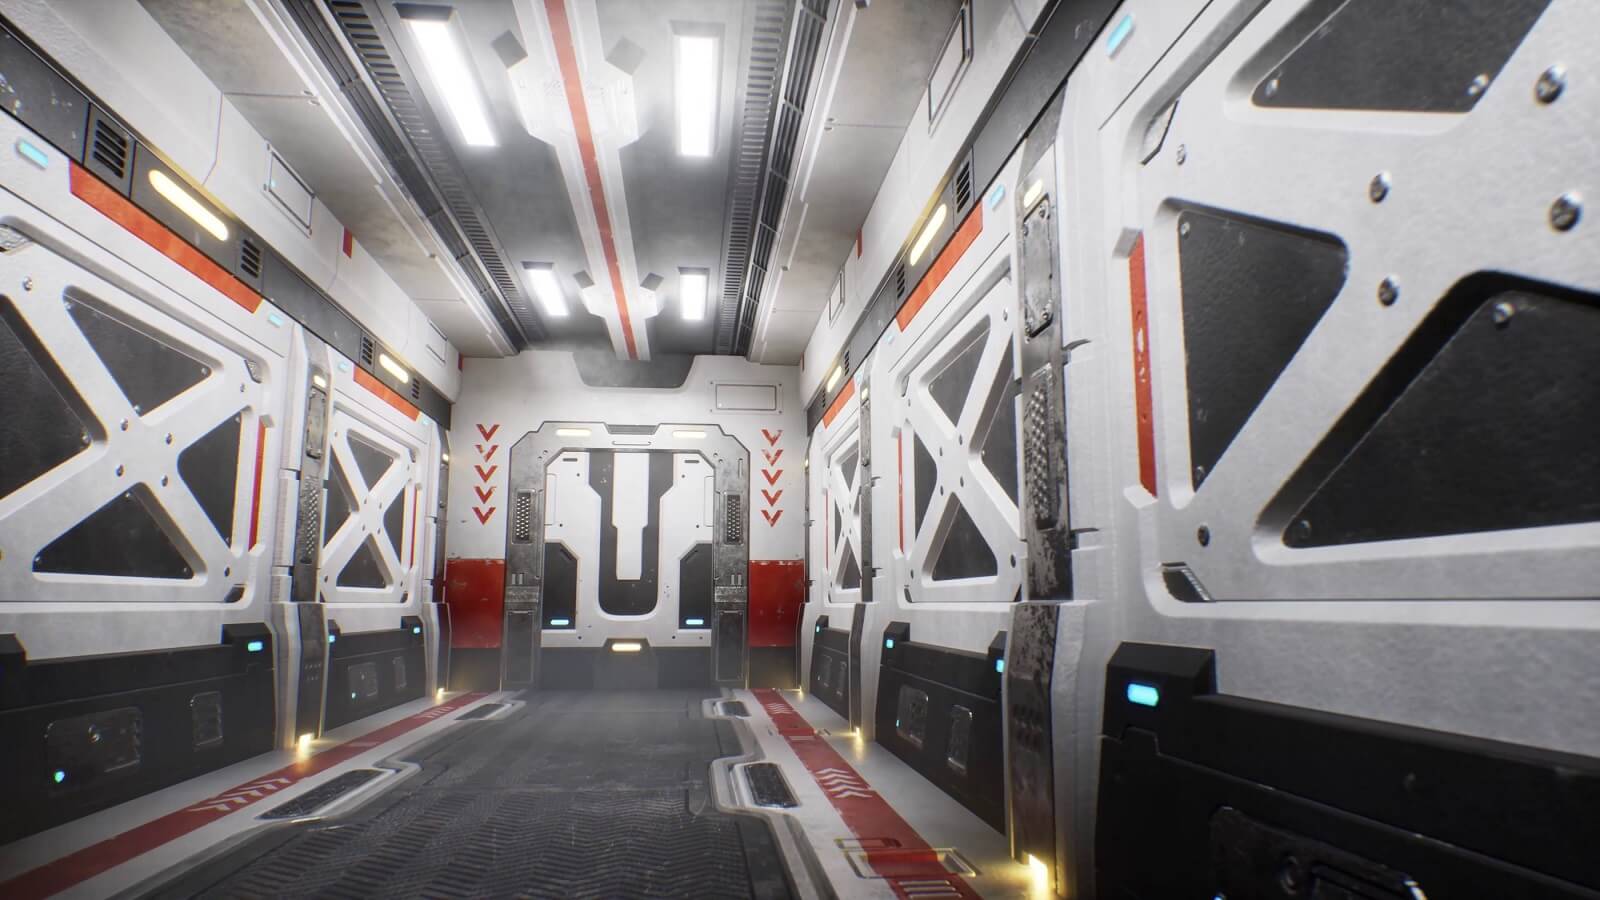 Interior view of a spaceship corridor with closed door